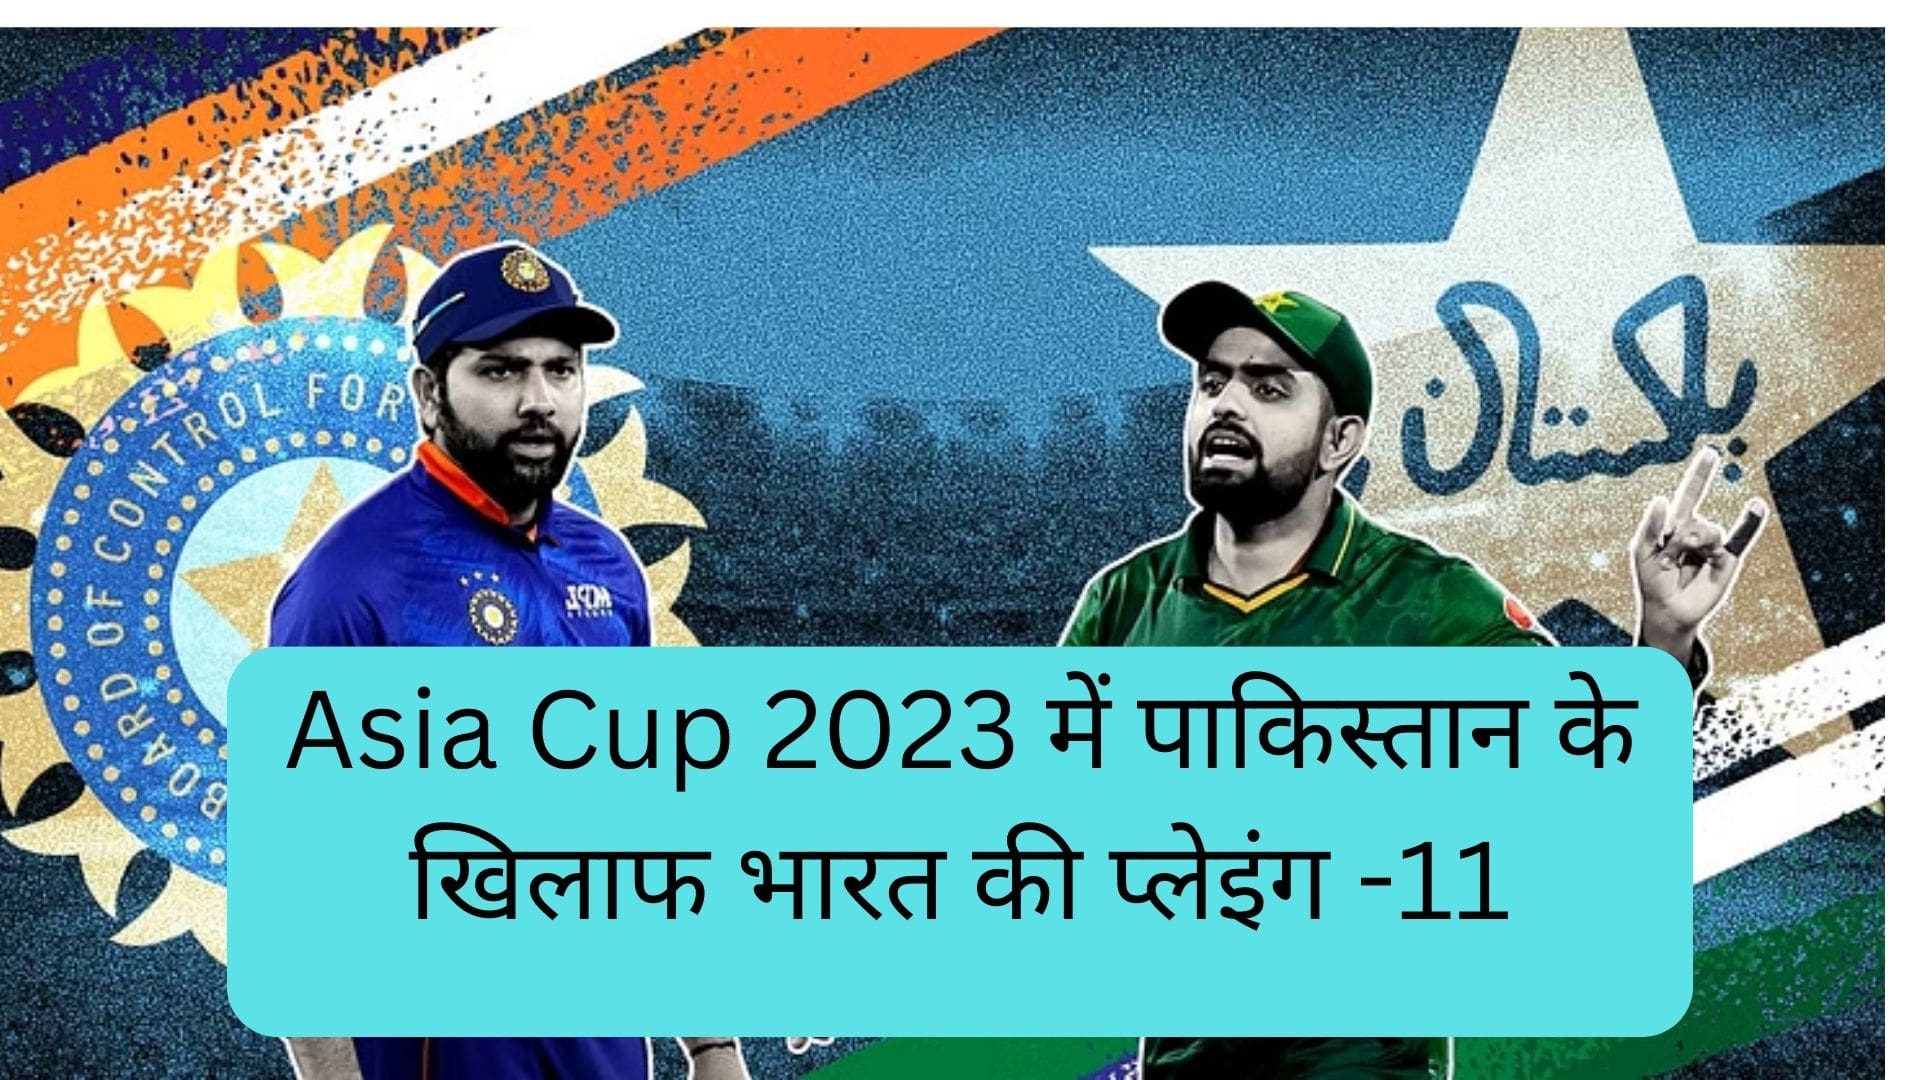 Asia Cup 2023 India team